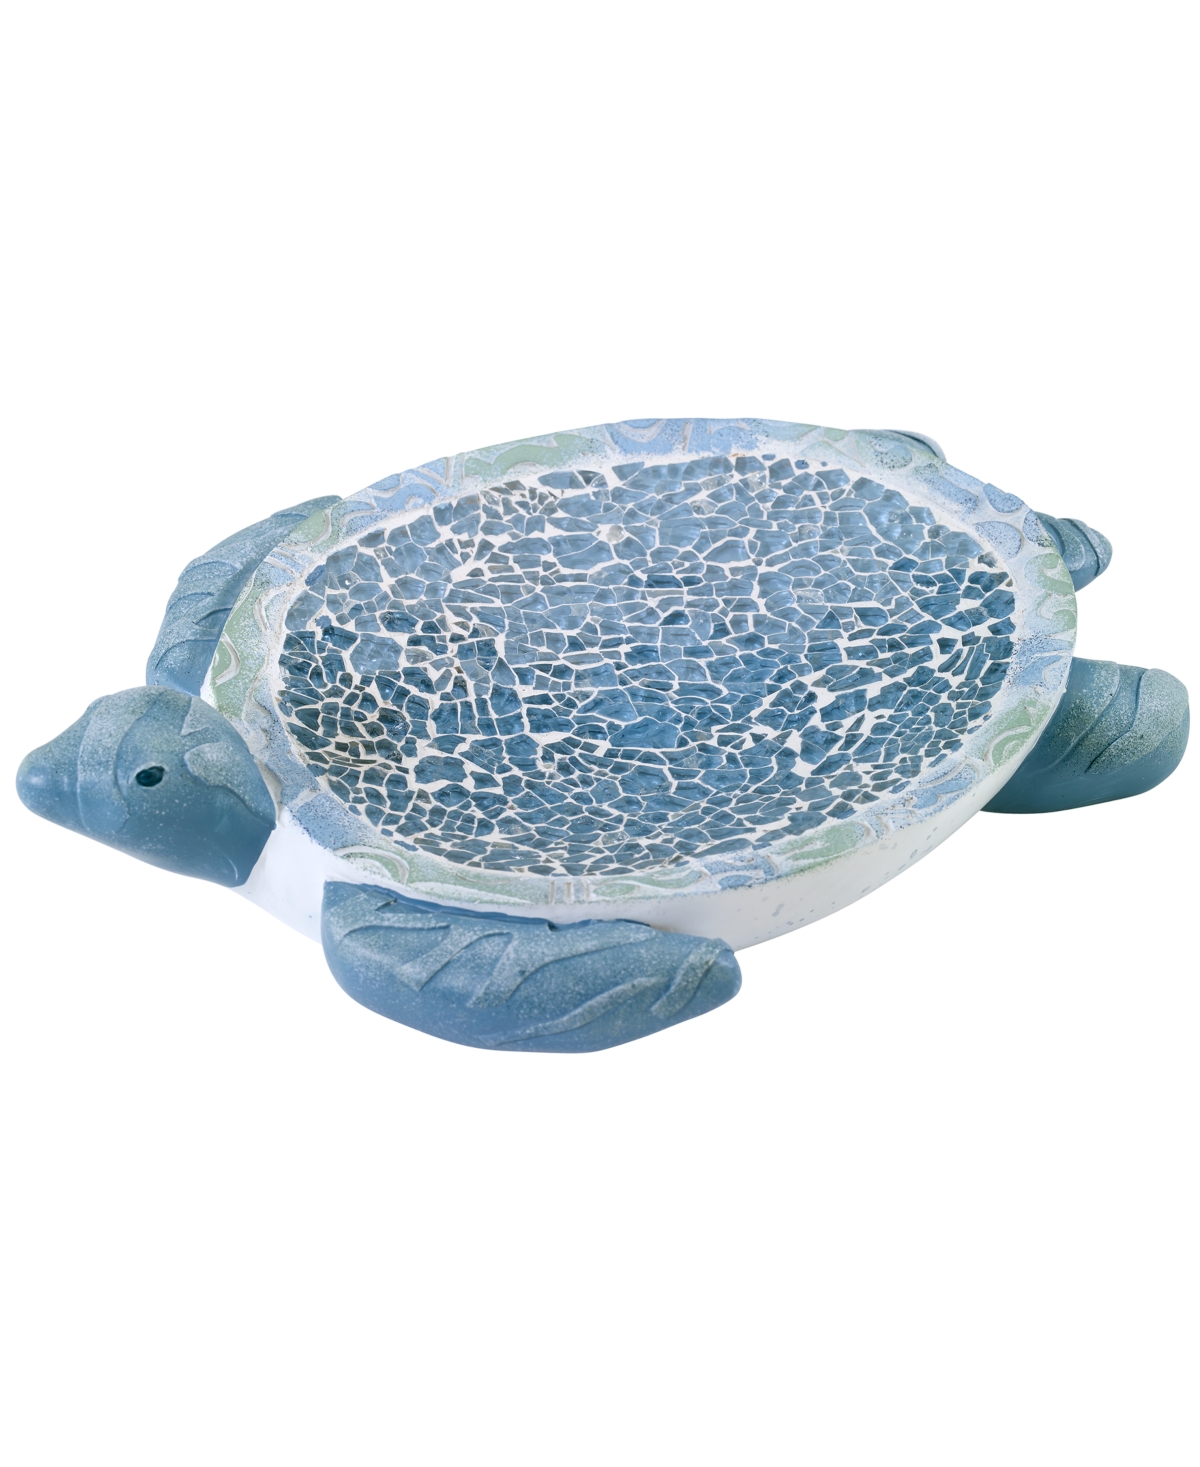 Caicos Sea Turtles Resin Soap Dish - Multi